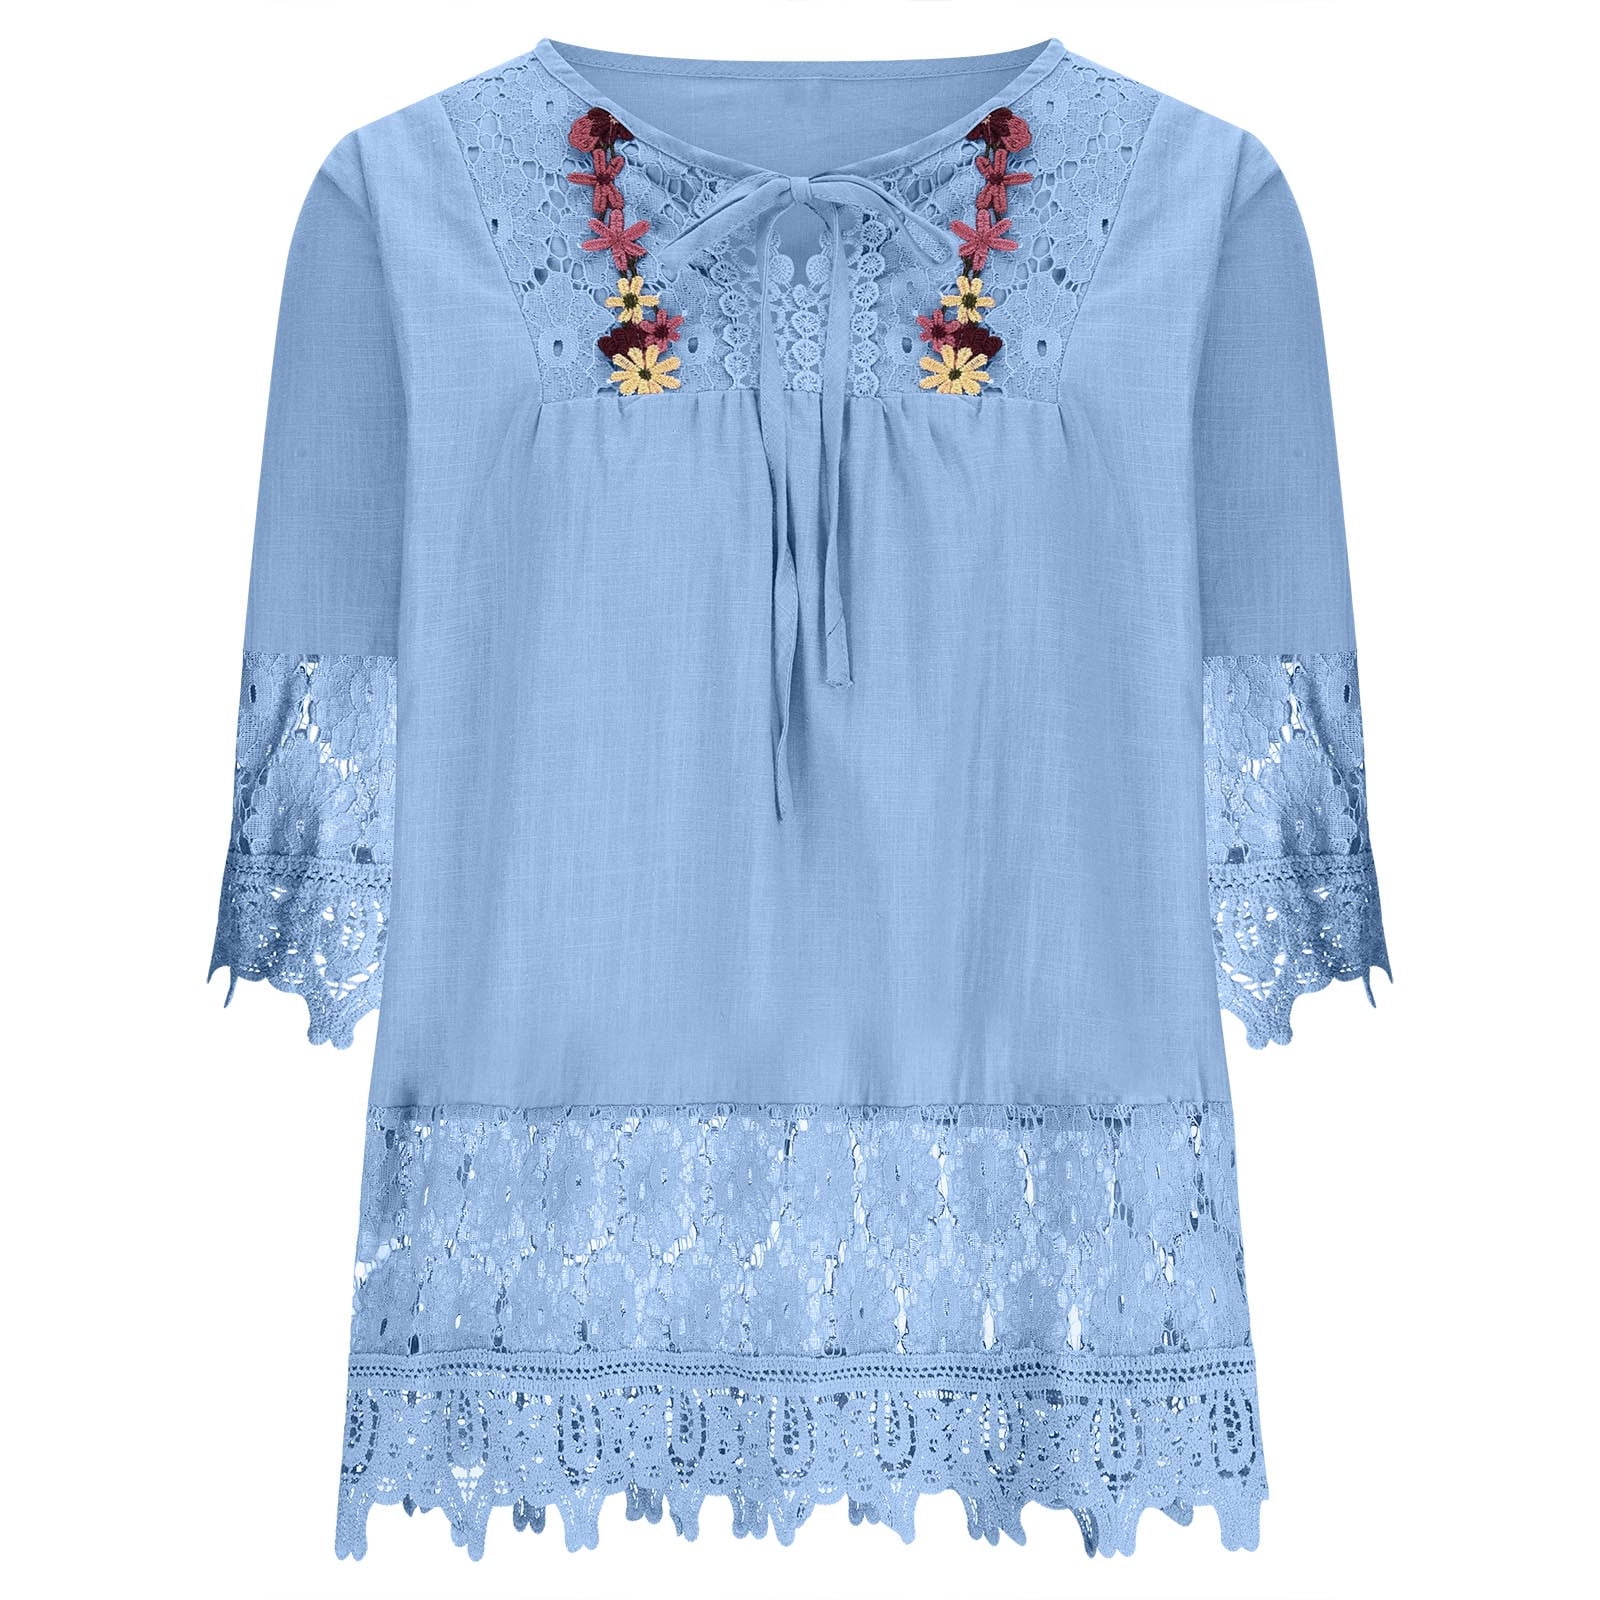 Scyoekwg 3/4 Sleeve Shirts for Women Vintage Crochet Lace Trim Bow